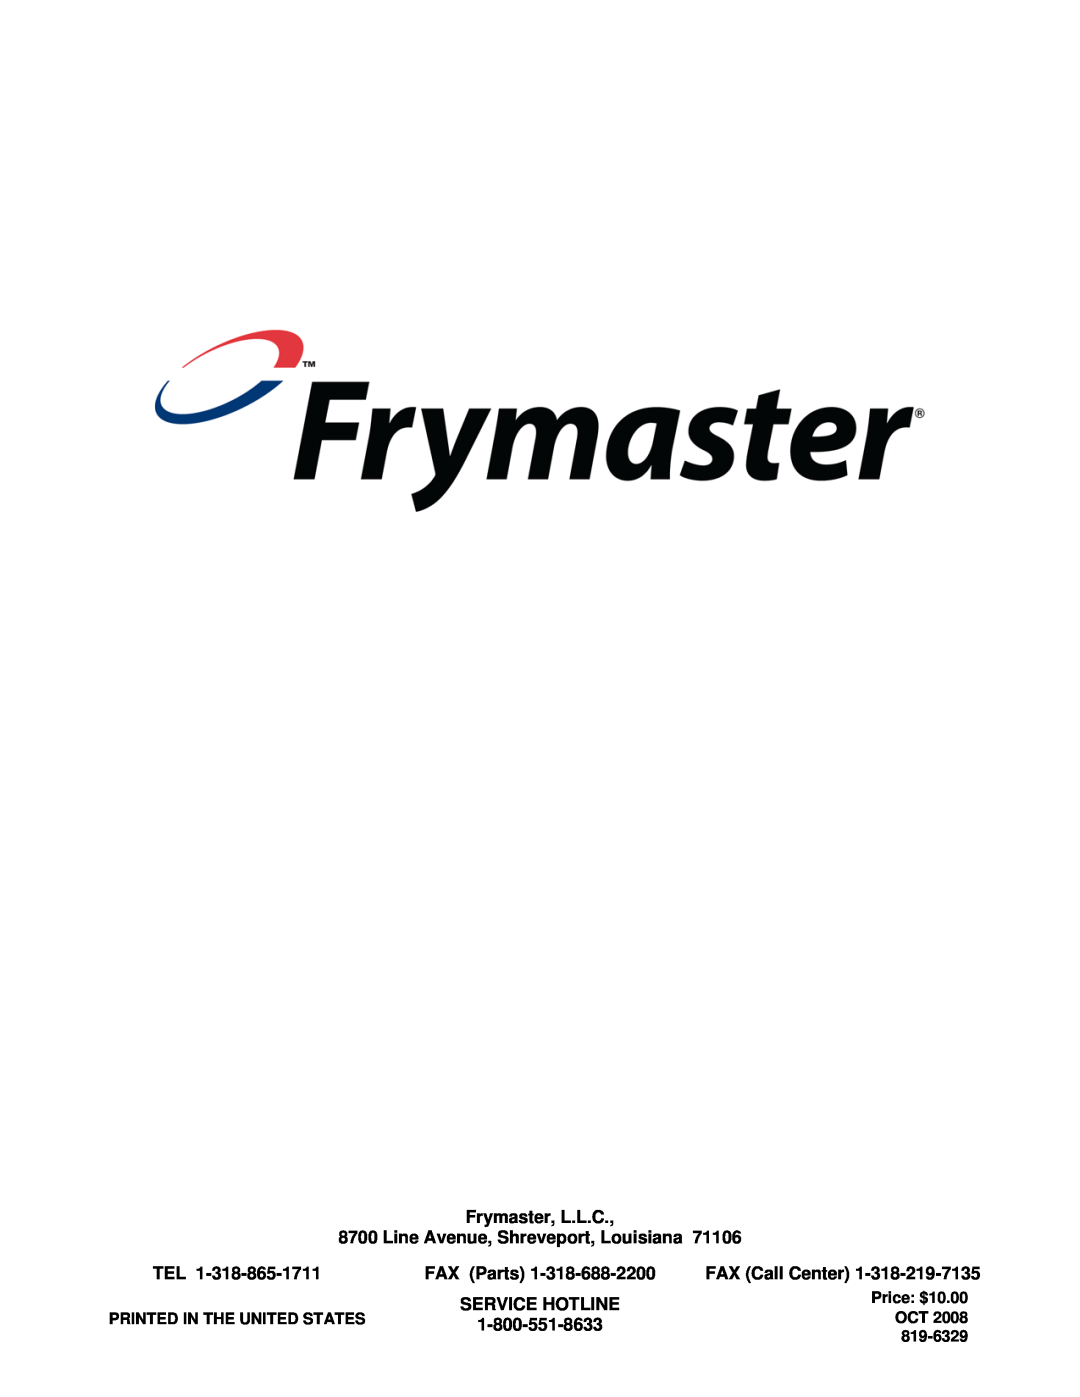 Frymaster *8196329* Frymaster, L.L.C, Line Avenue, Shreveport, Louisiana, FAX Parts, FAX Call Center, Service Hotline 